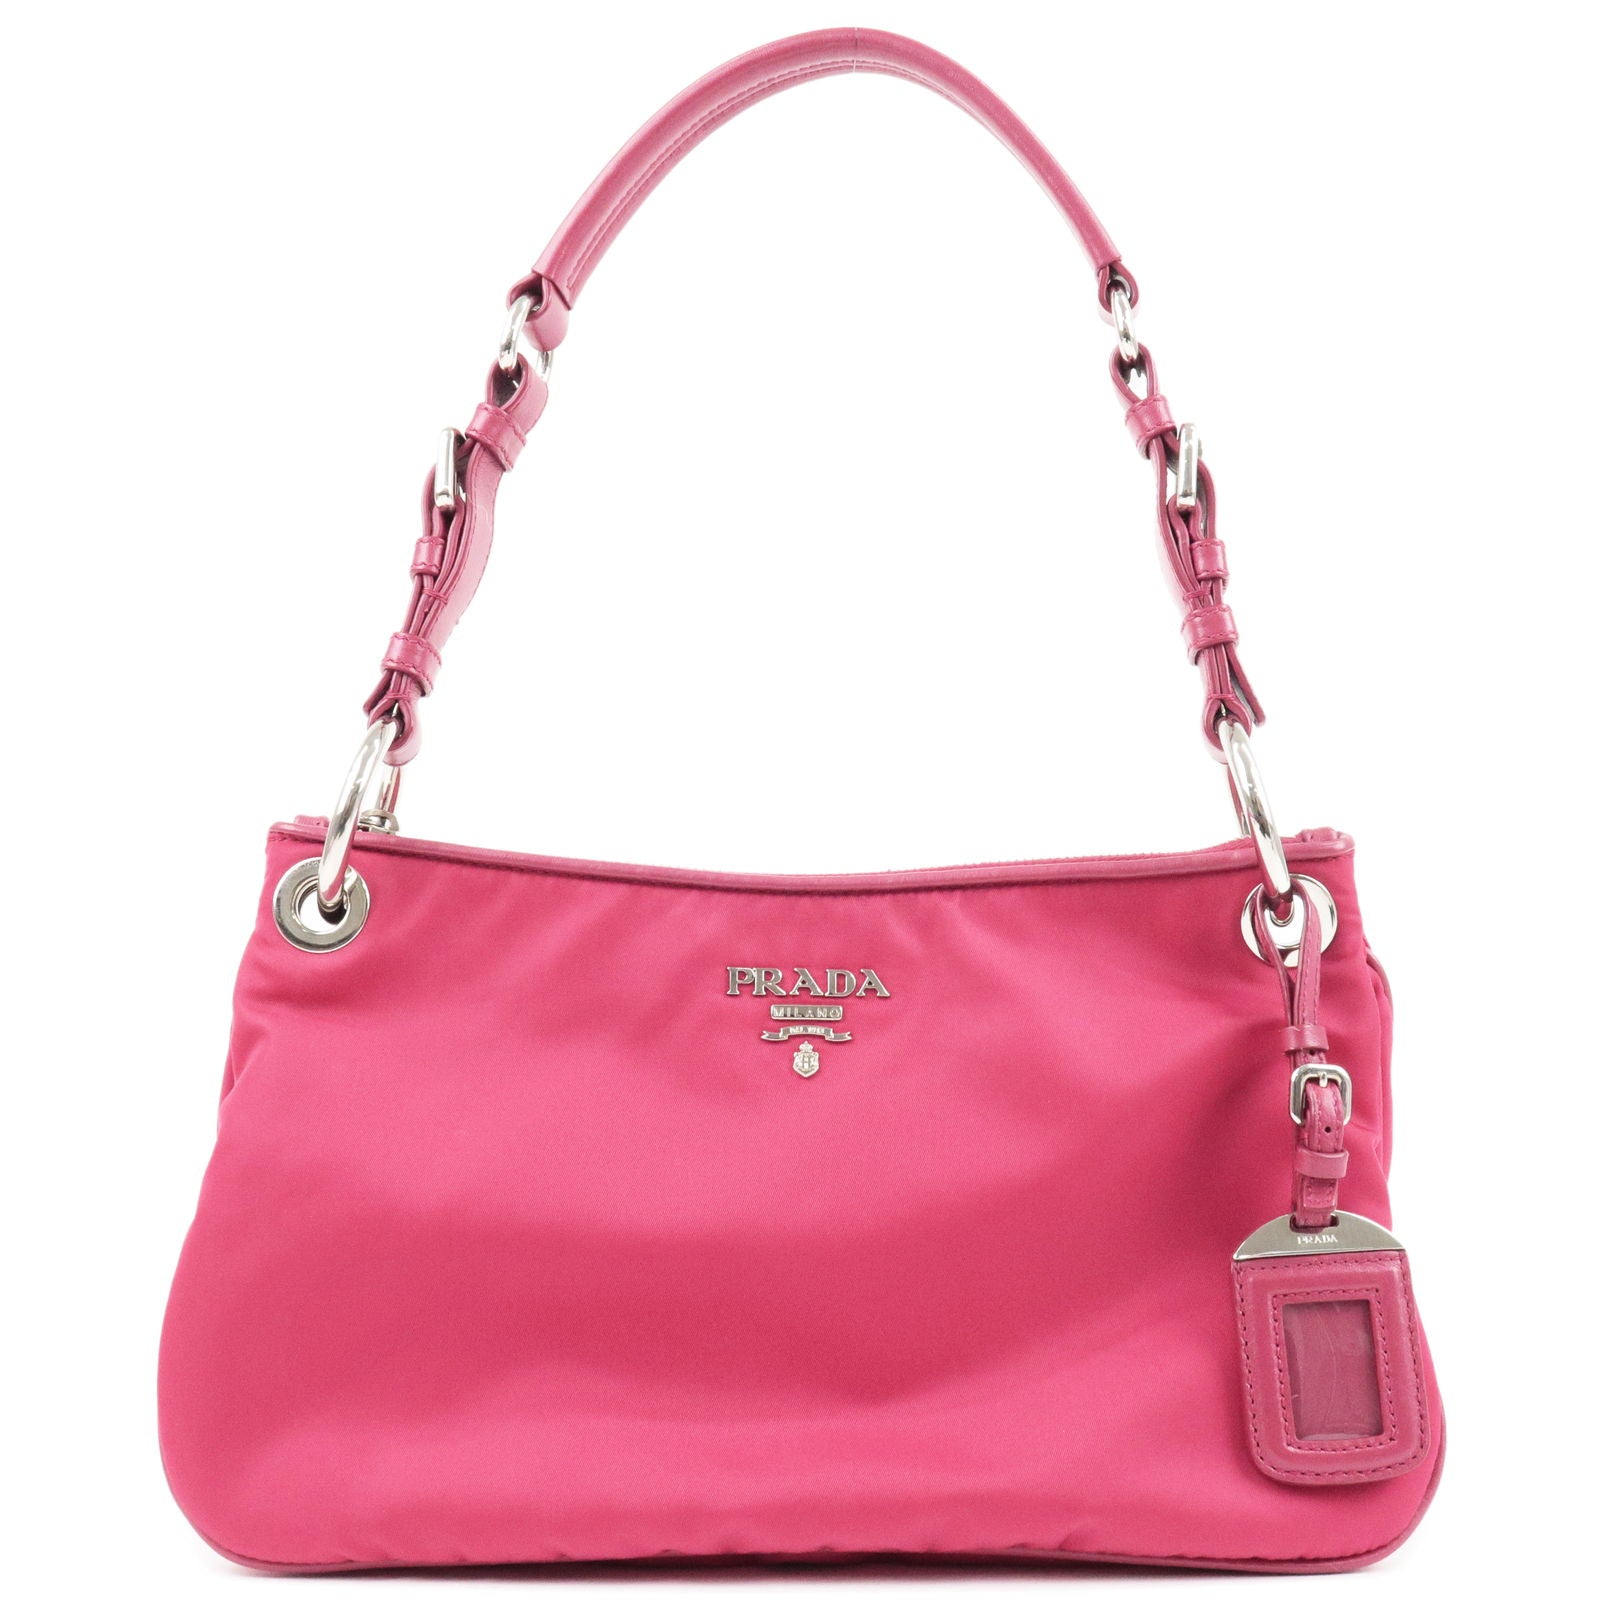 Prada crossbody bag aesthetic Price::N12,000 To order send a dm